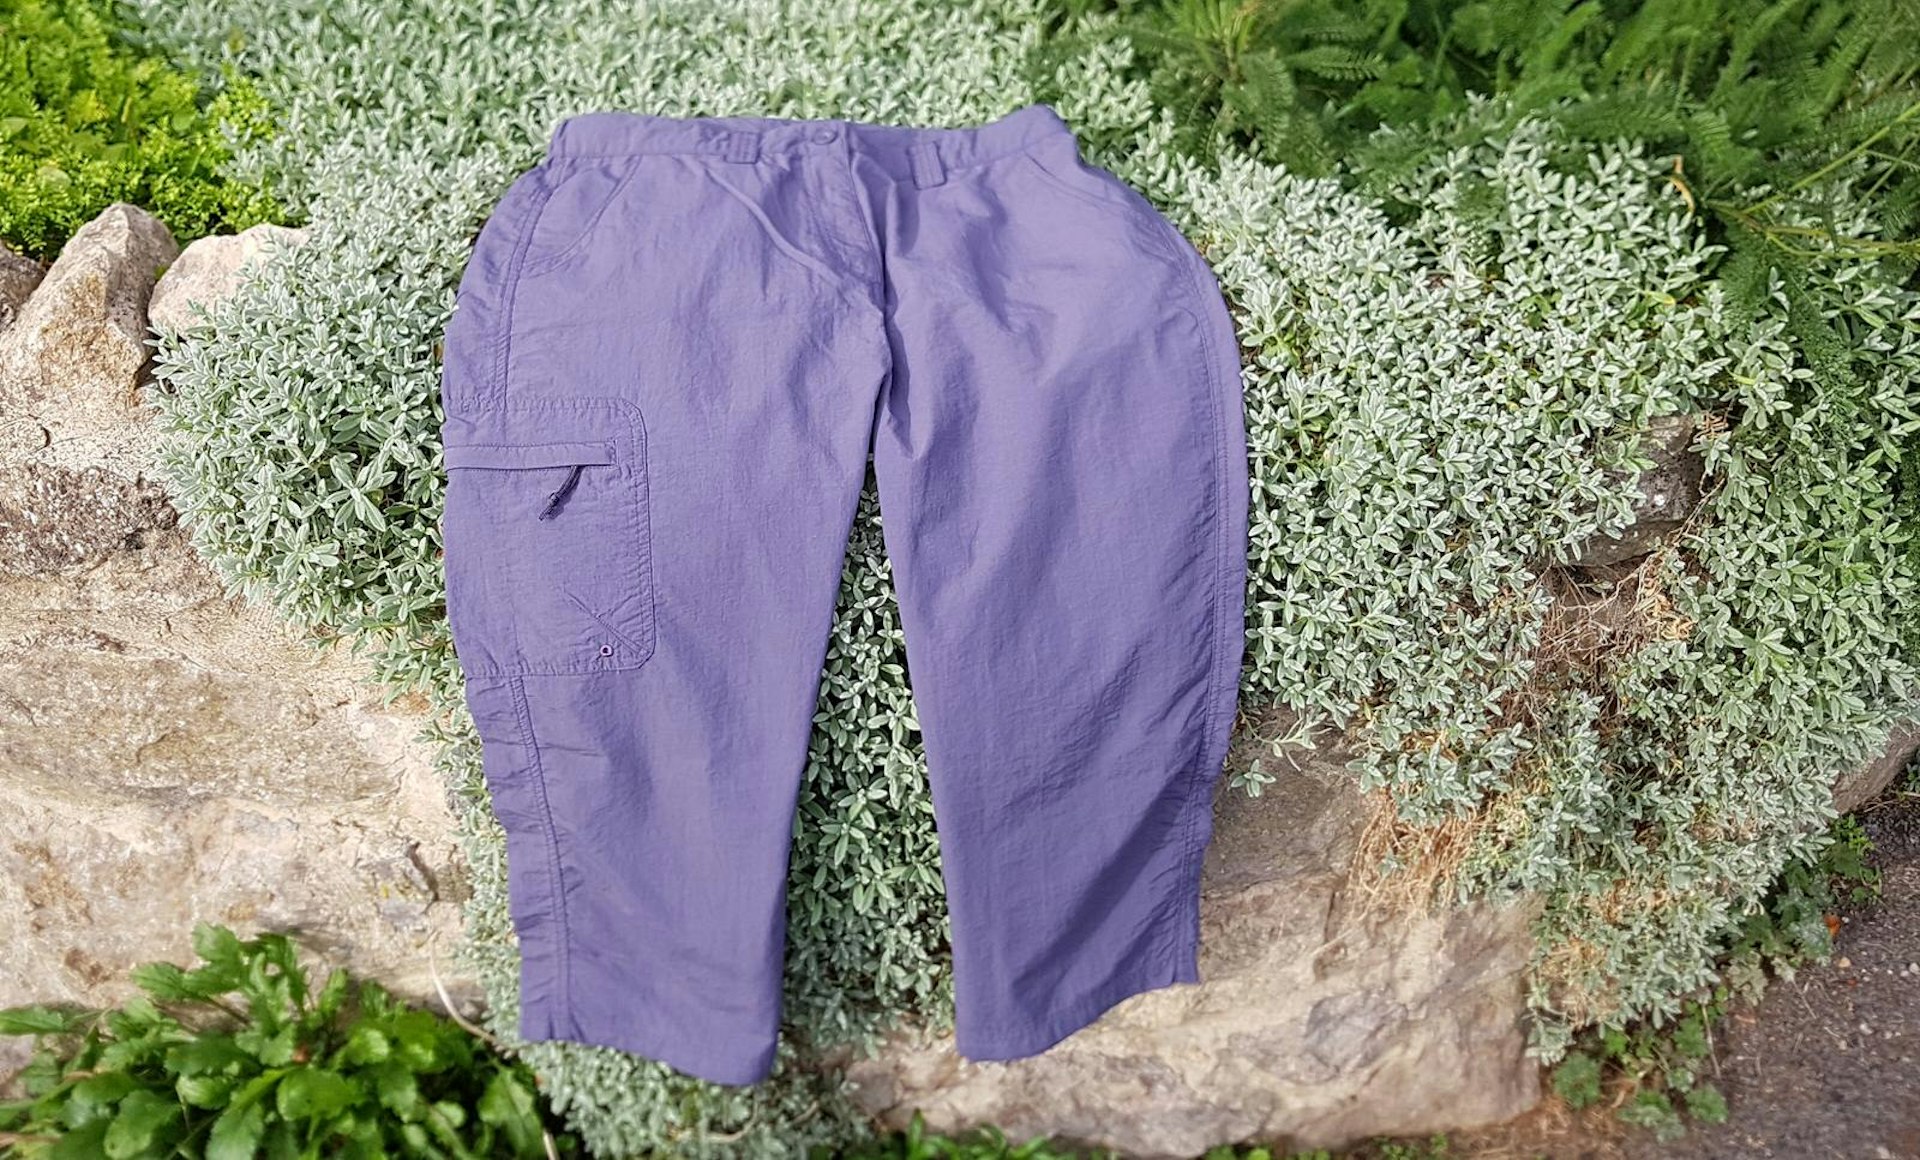 A pair of purple Explore Capris three-quarter length trousers draped over a wall